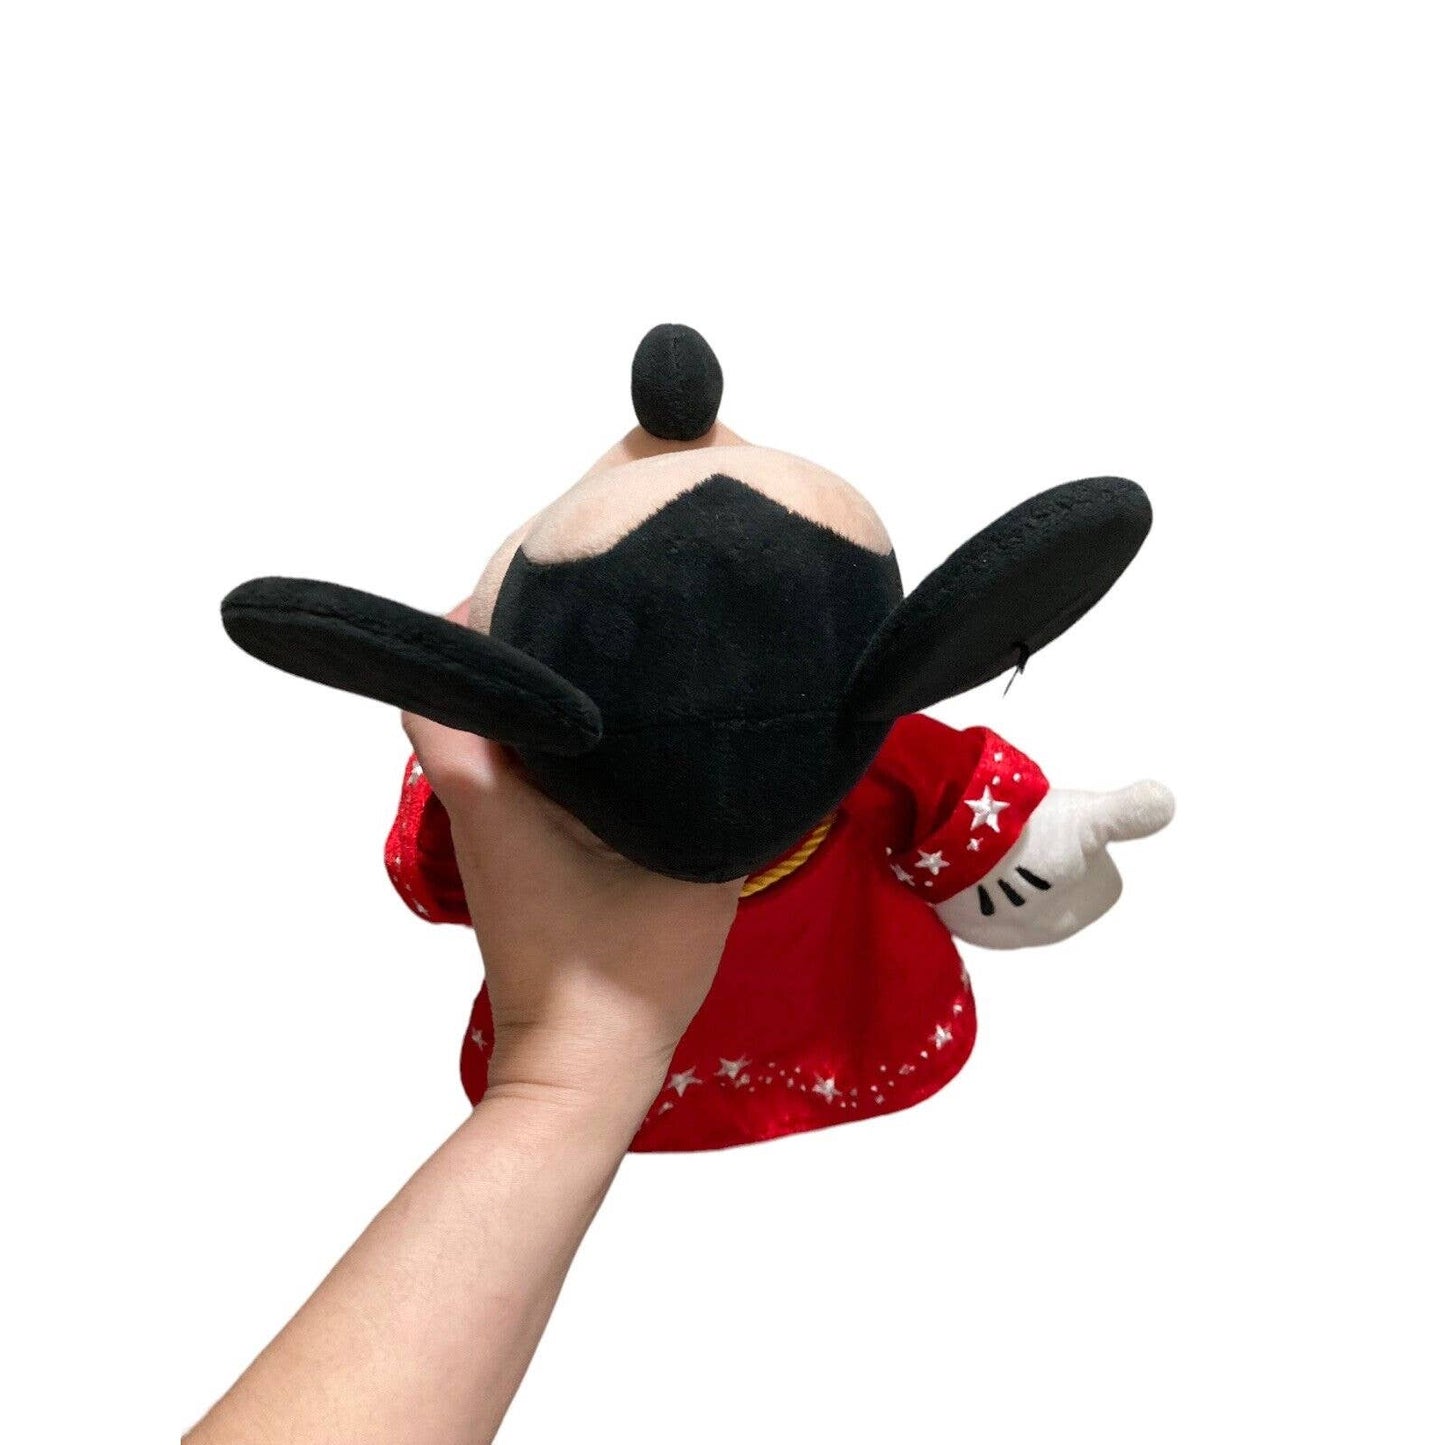 Disney Parks Mickey Mouse sorcerer's apprentice Stuffed Animal Plush Toy 15”